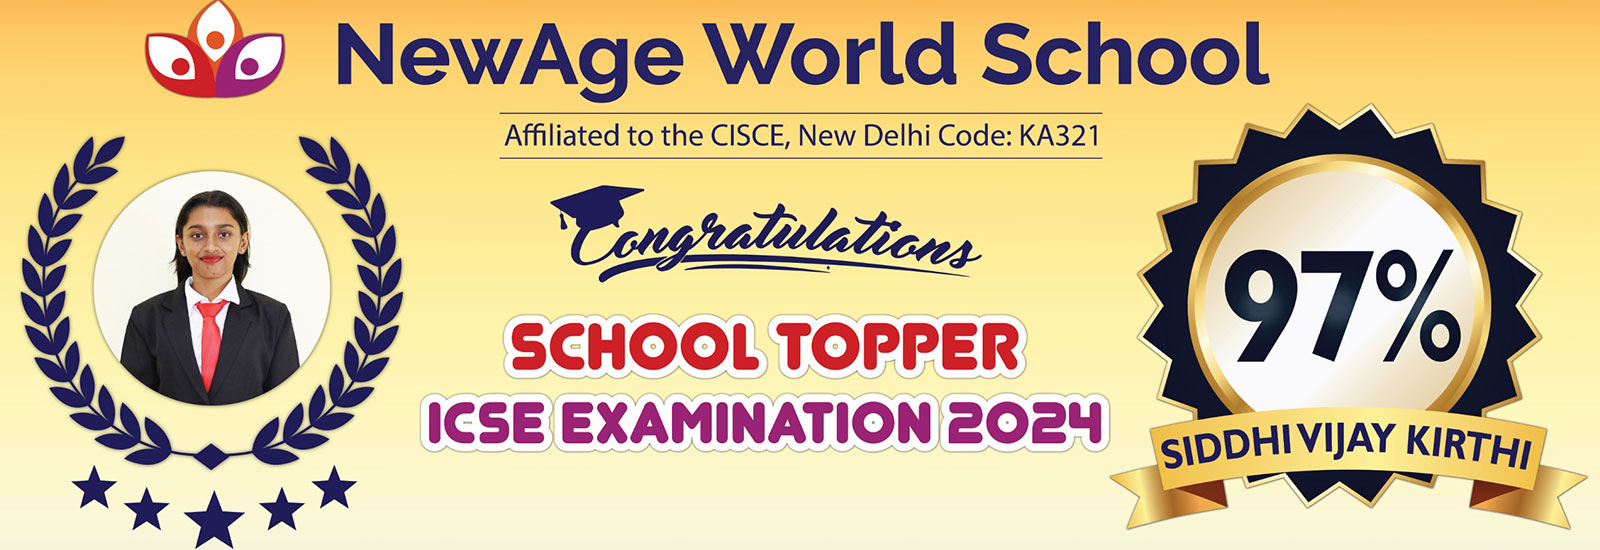 school-topper-icse-exam-newage-world-school